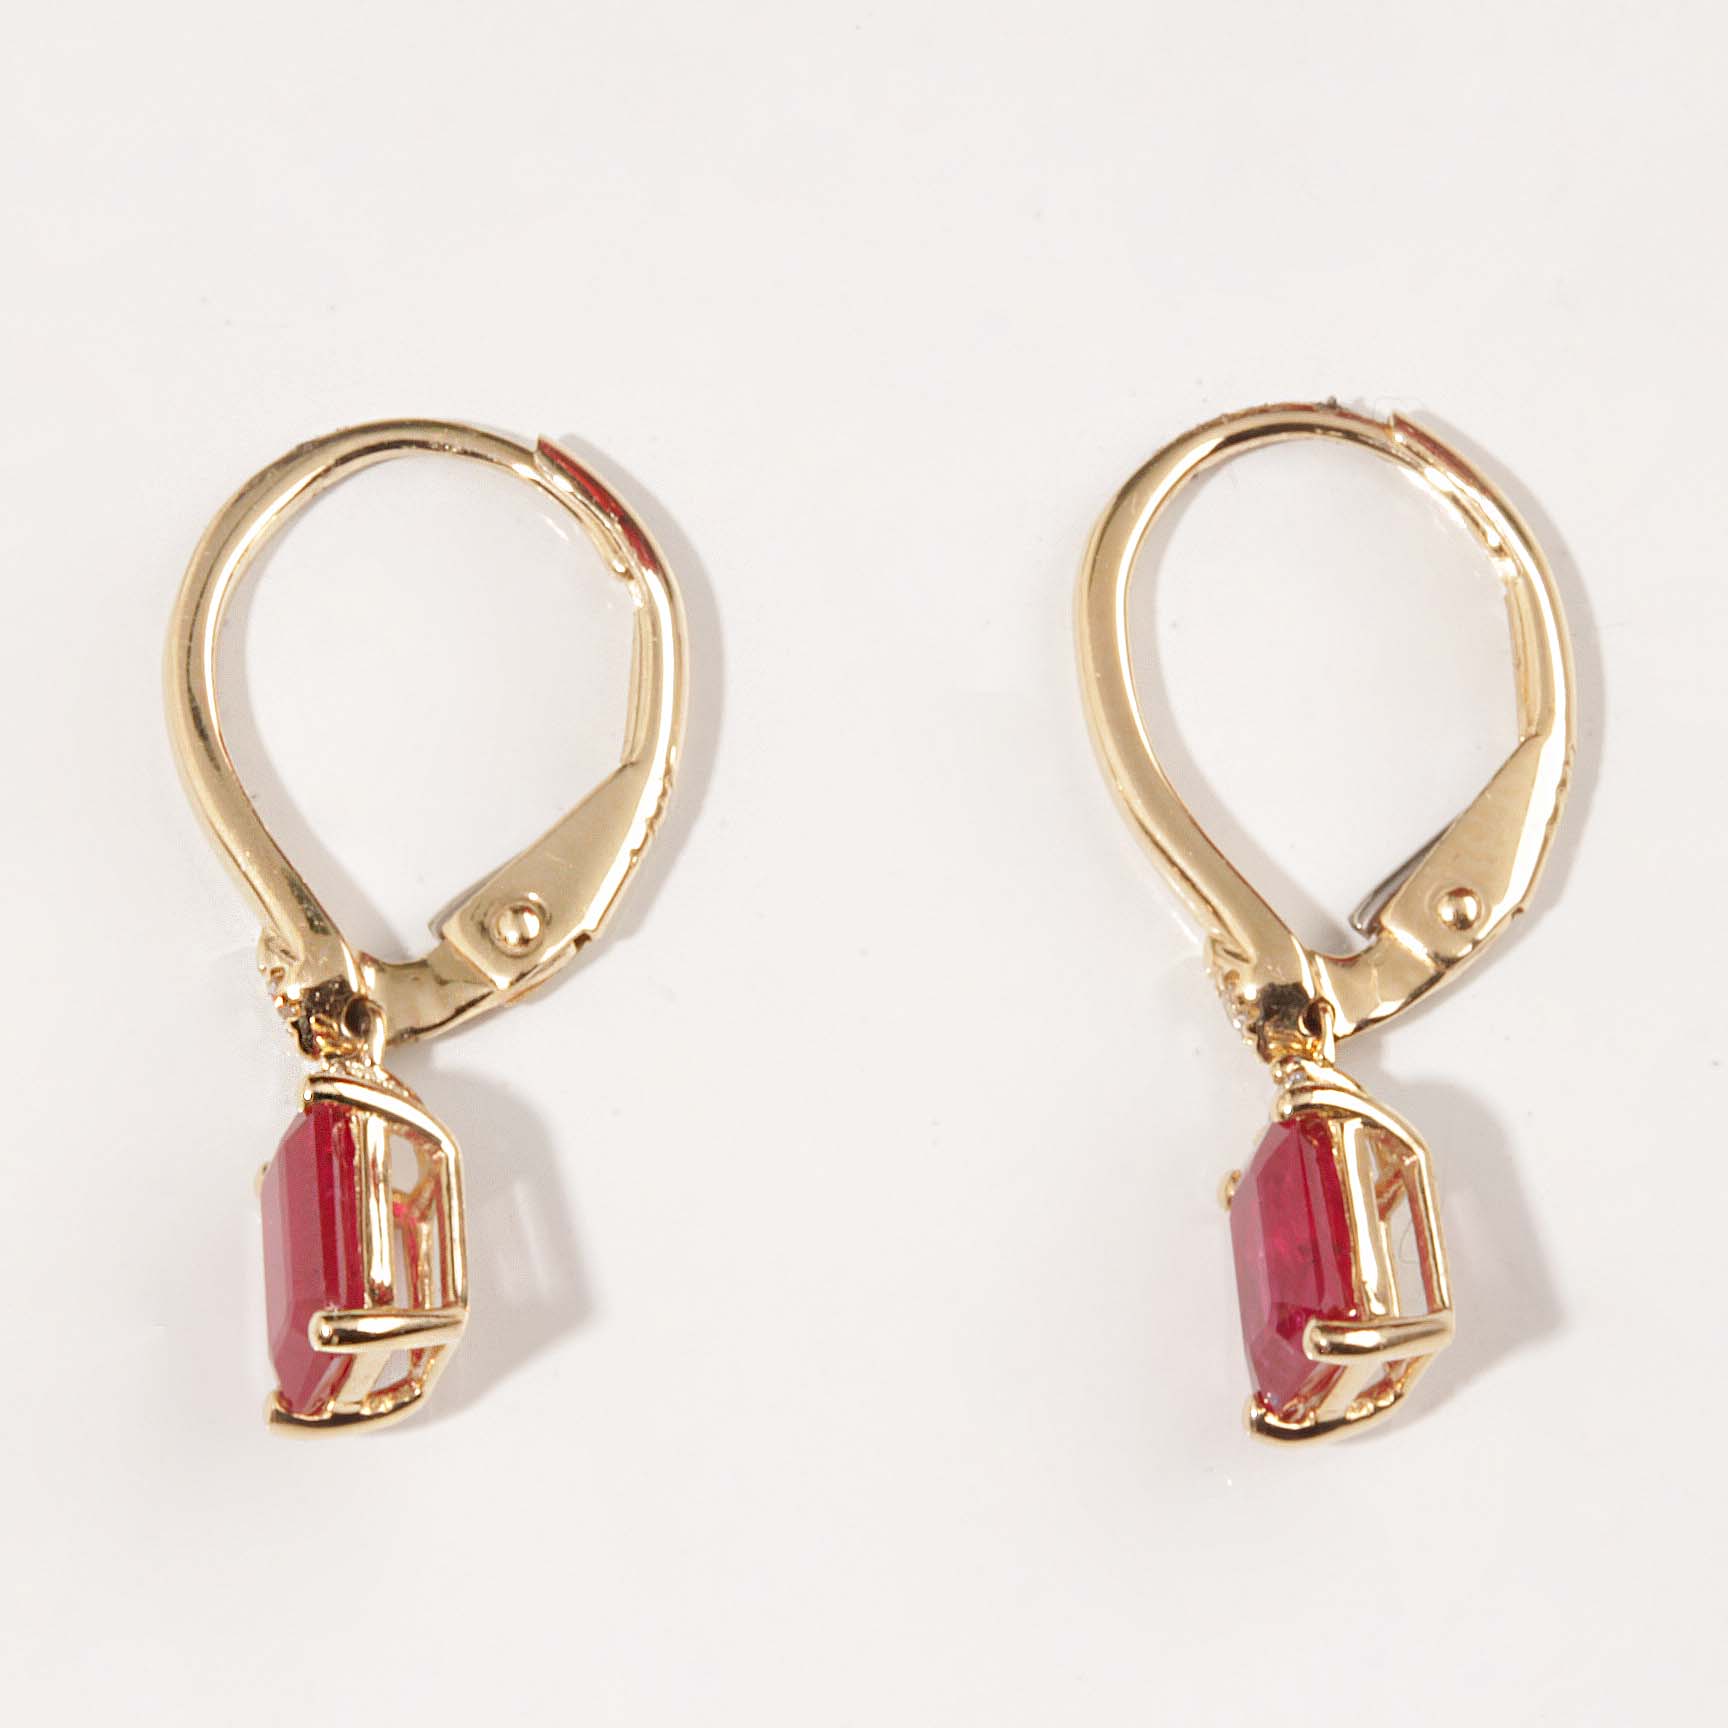 14KY 1.40ct Ruby &.06tdw Diamonds Lever Back Earrings #210-00095